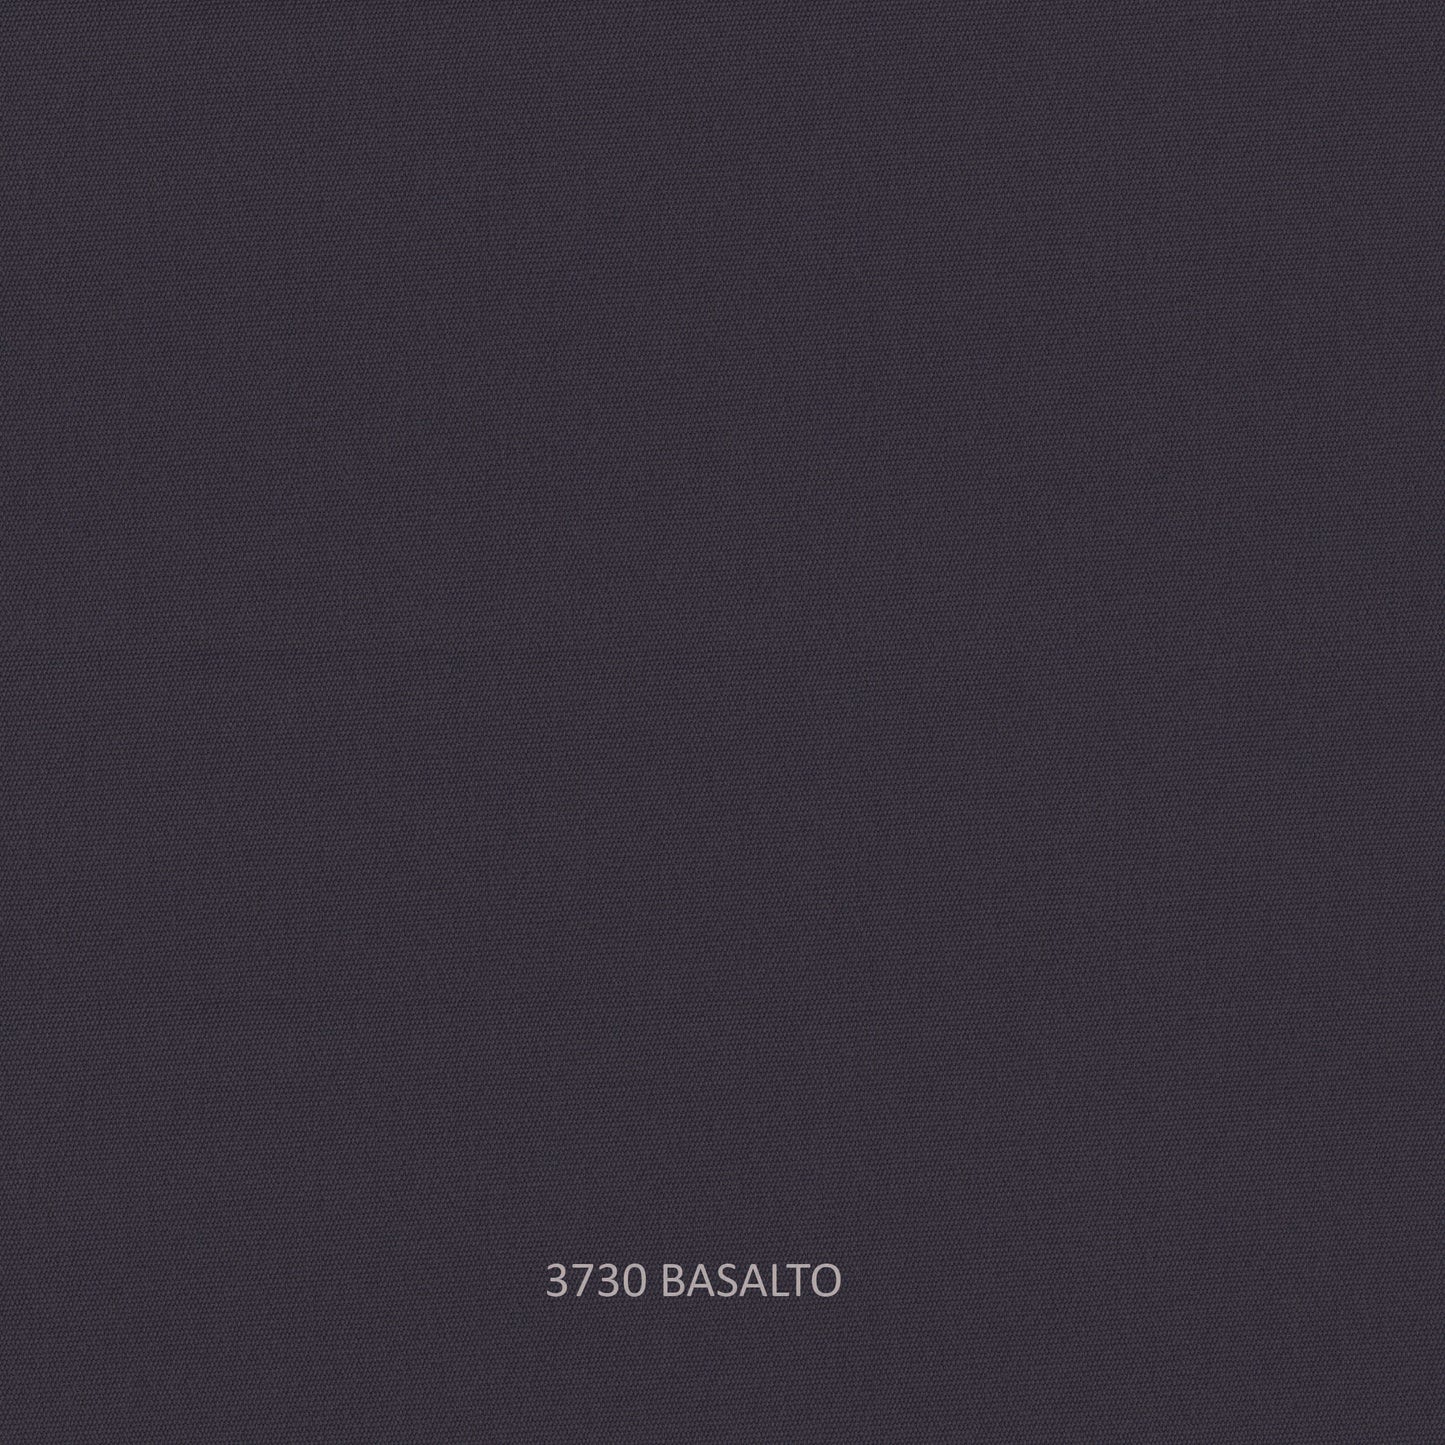 Milano Chaise - PadioLiving - Milano Chaise - Outdoor Lounger - Dark Grey 21mm Strap - Basalto (£1181) - PadioLiving